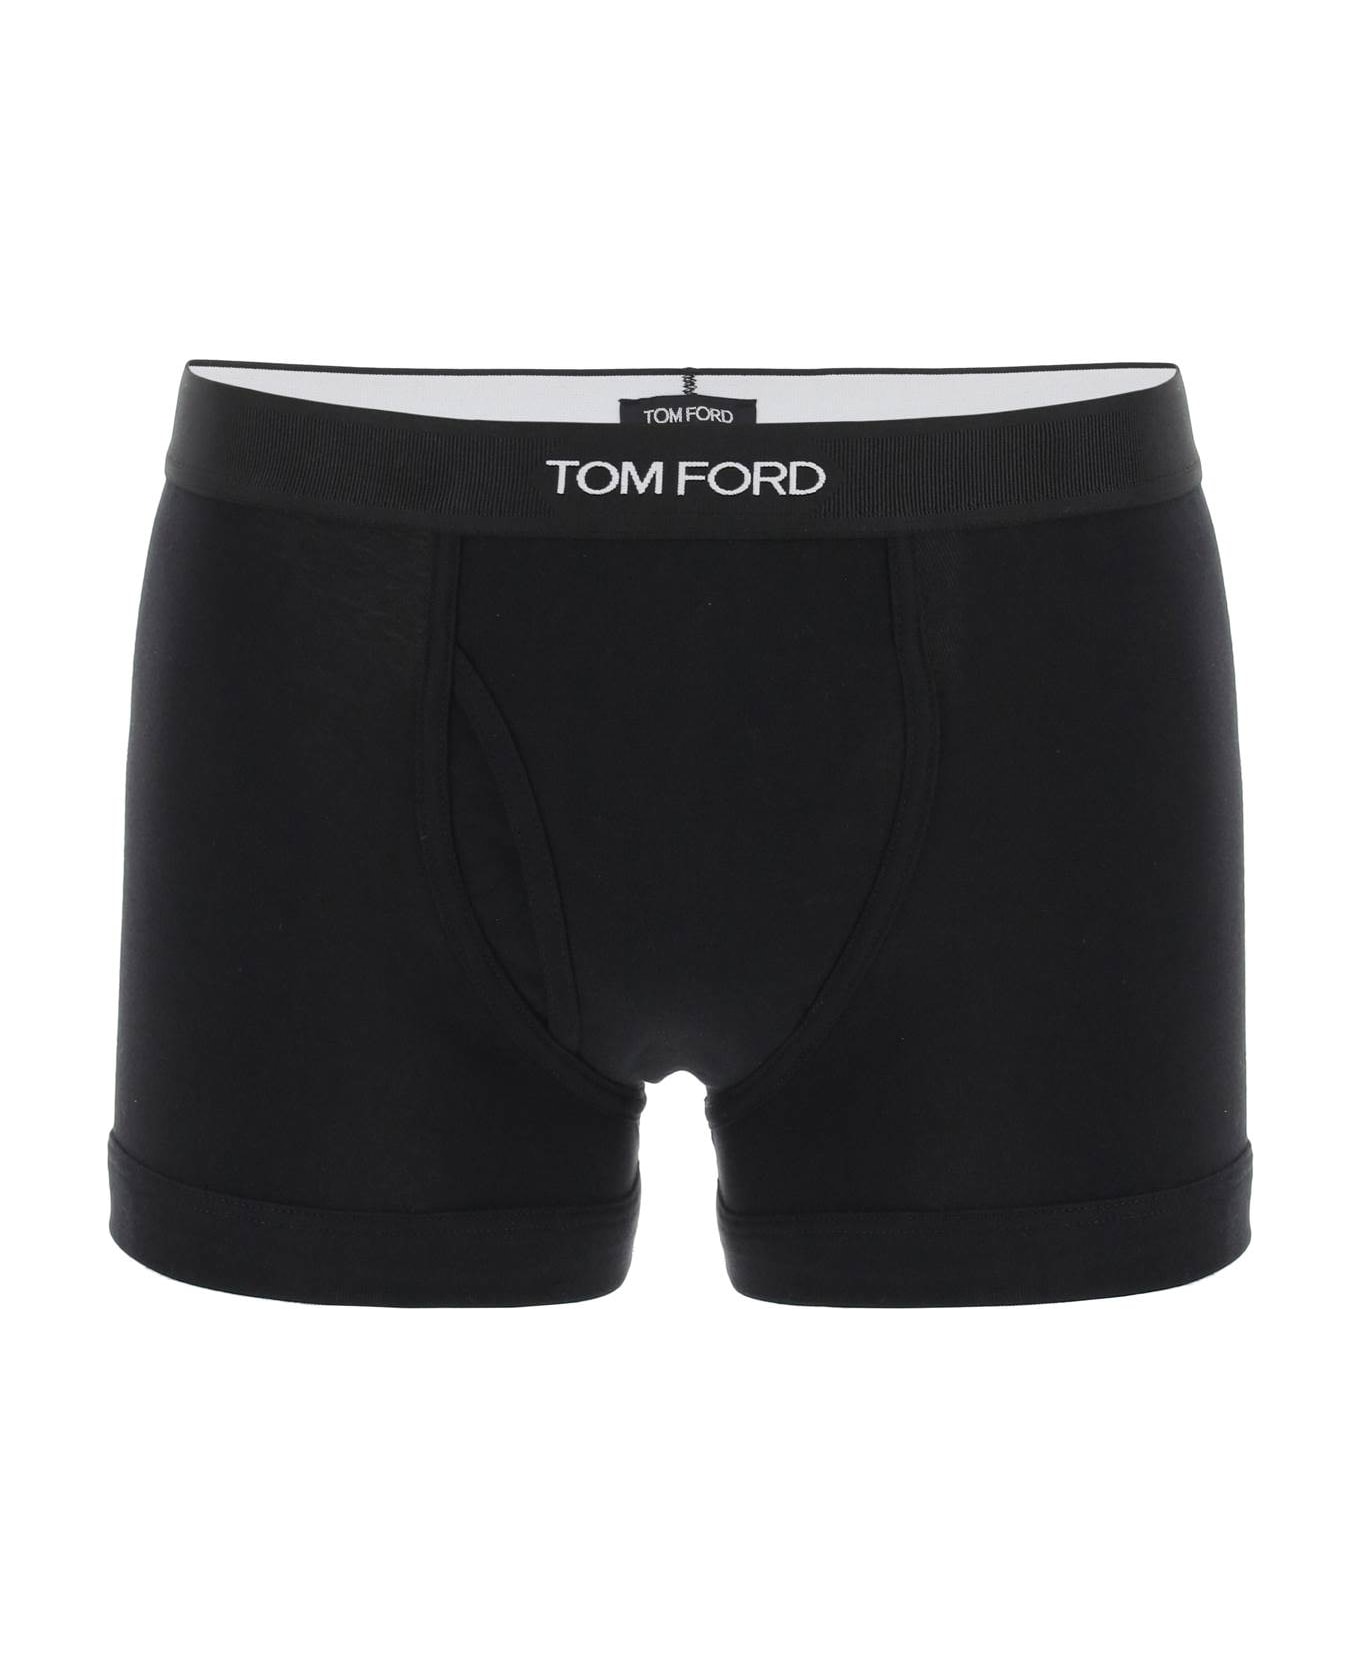 Tom Ford Logo Print Cotton Trunks - black